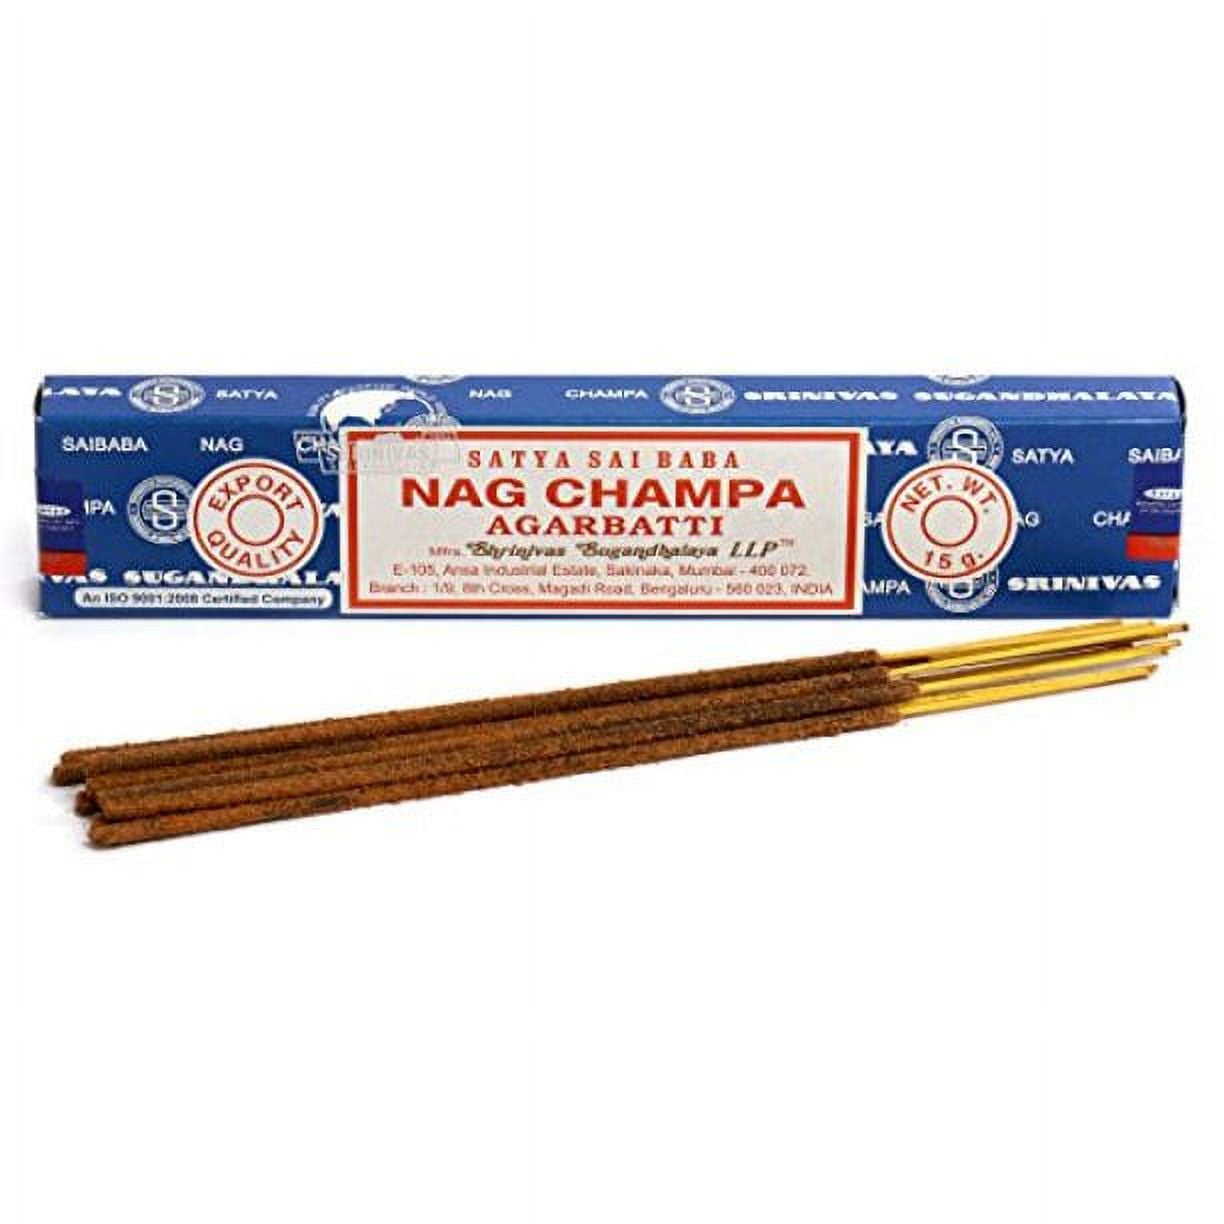 3 Packs Origional Satya SAI Baba Nag Champa Incense Sticks Joss Insence - Insense 15g Box Nagchampa Agarbatti